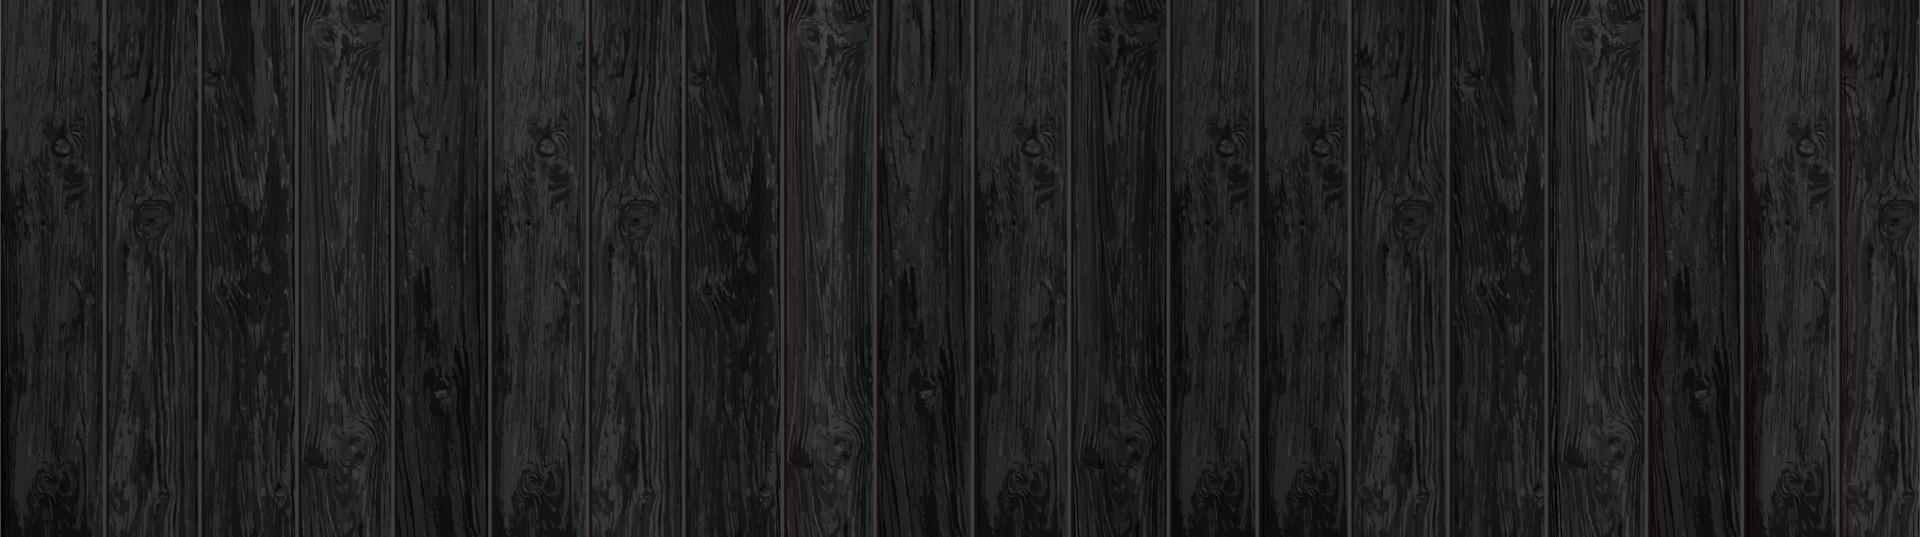 realista negro de madera tablero antecedentes vector